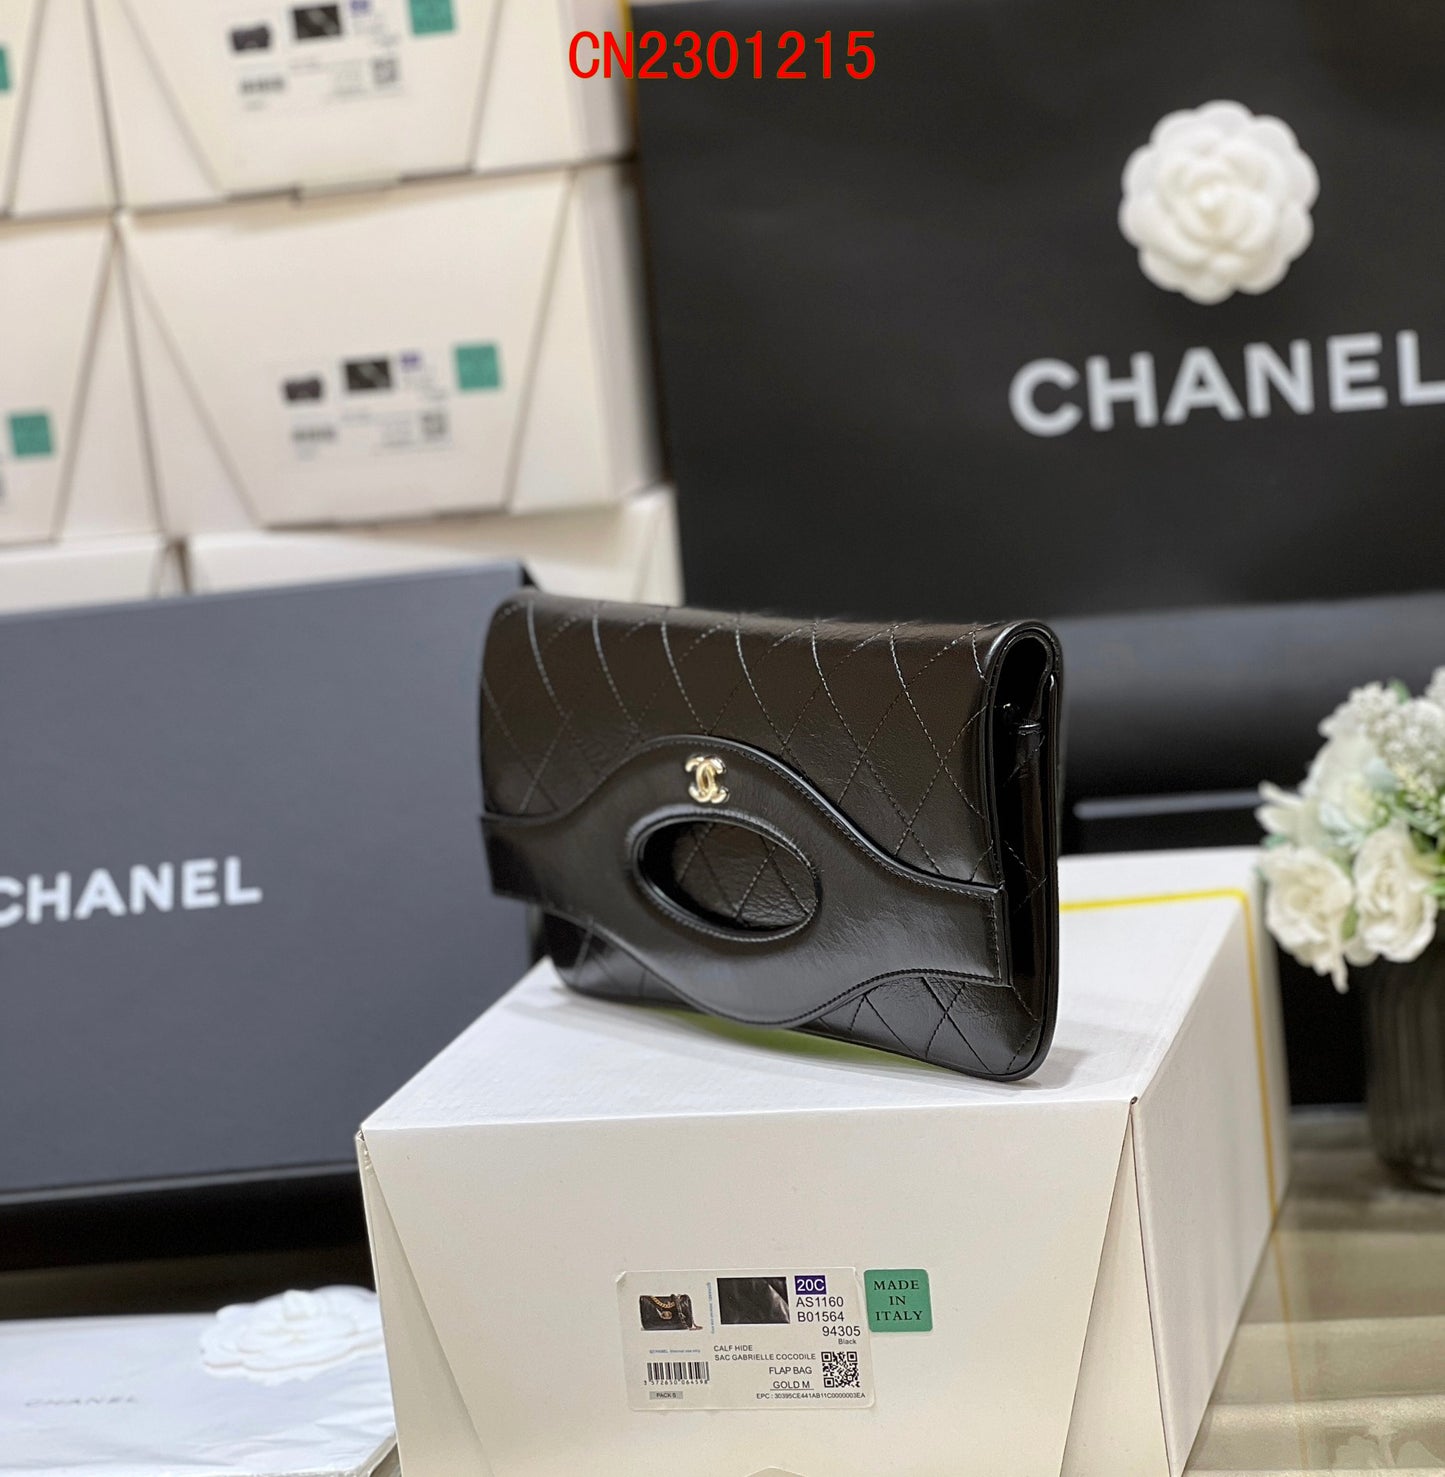 Chanel Cruise bag